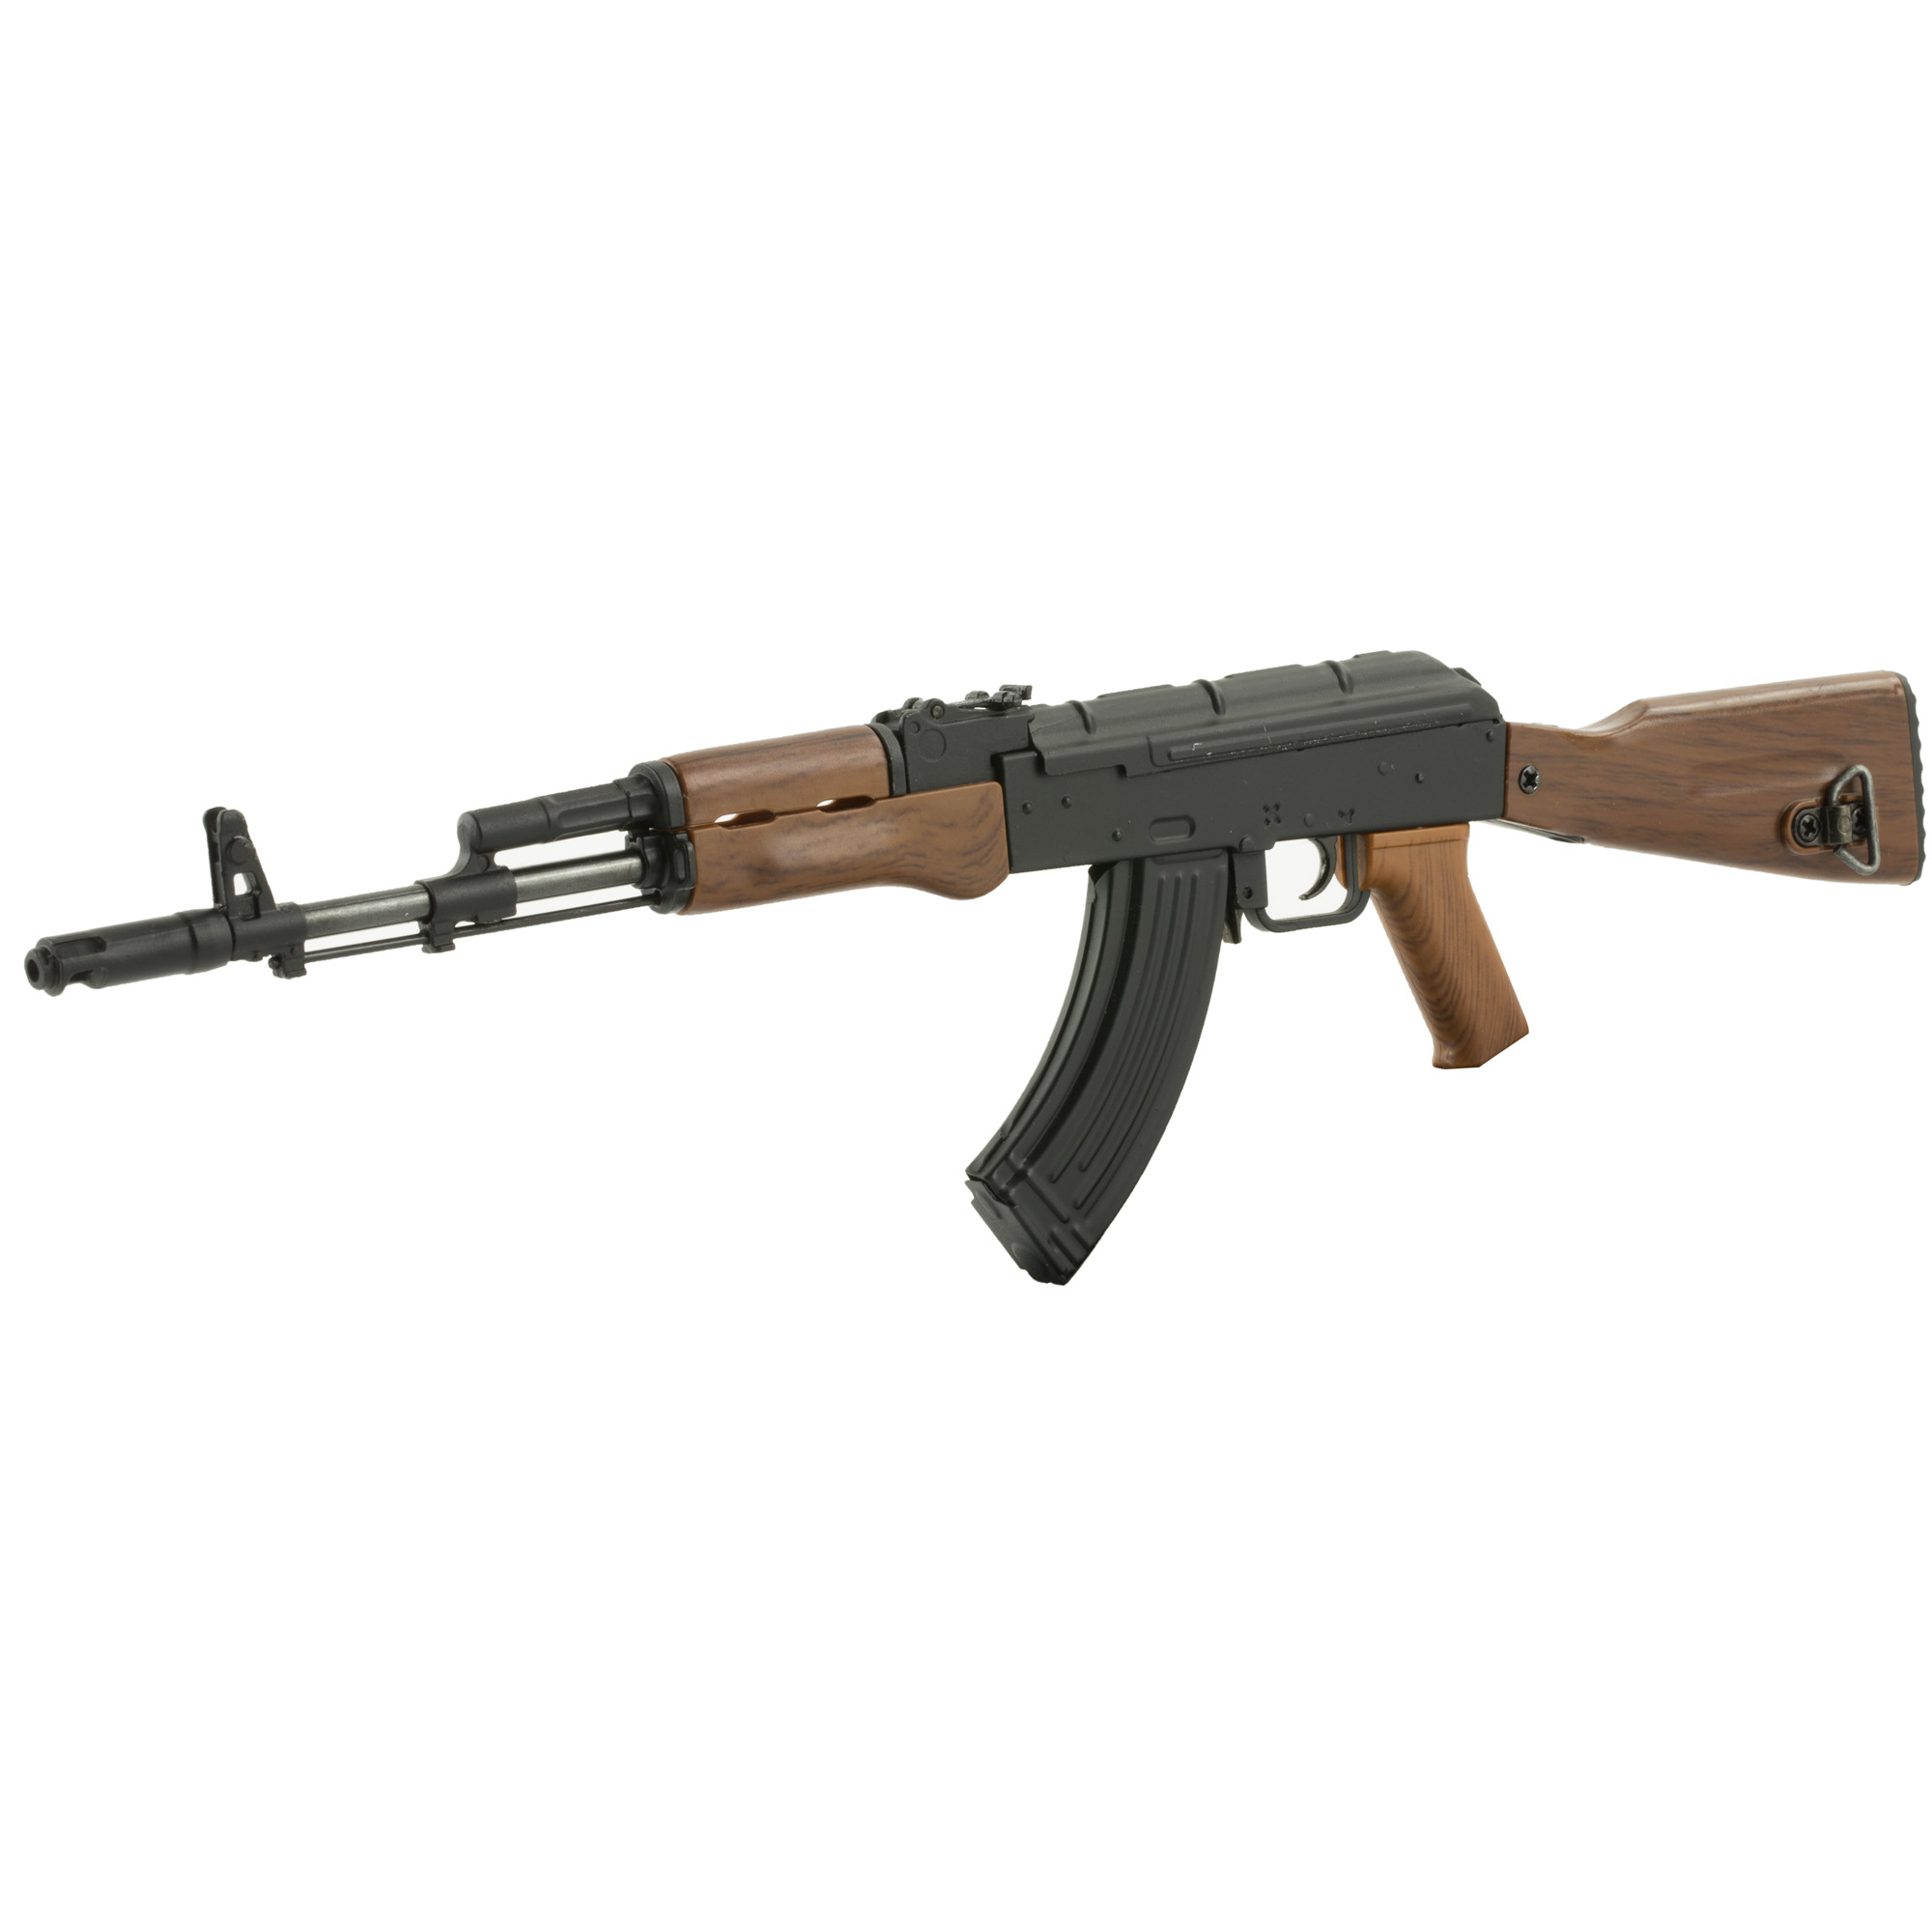 Advanced Technology International, AK-47 Non-Firing Mini Replica, 1/3